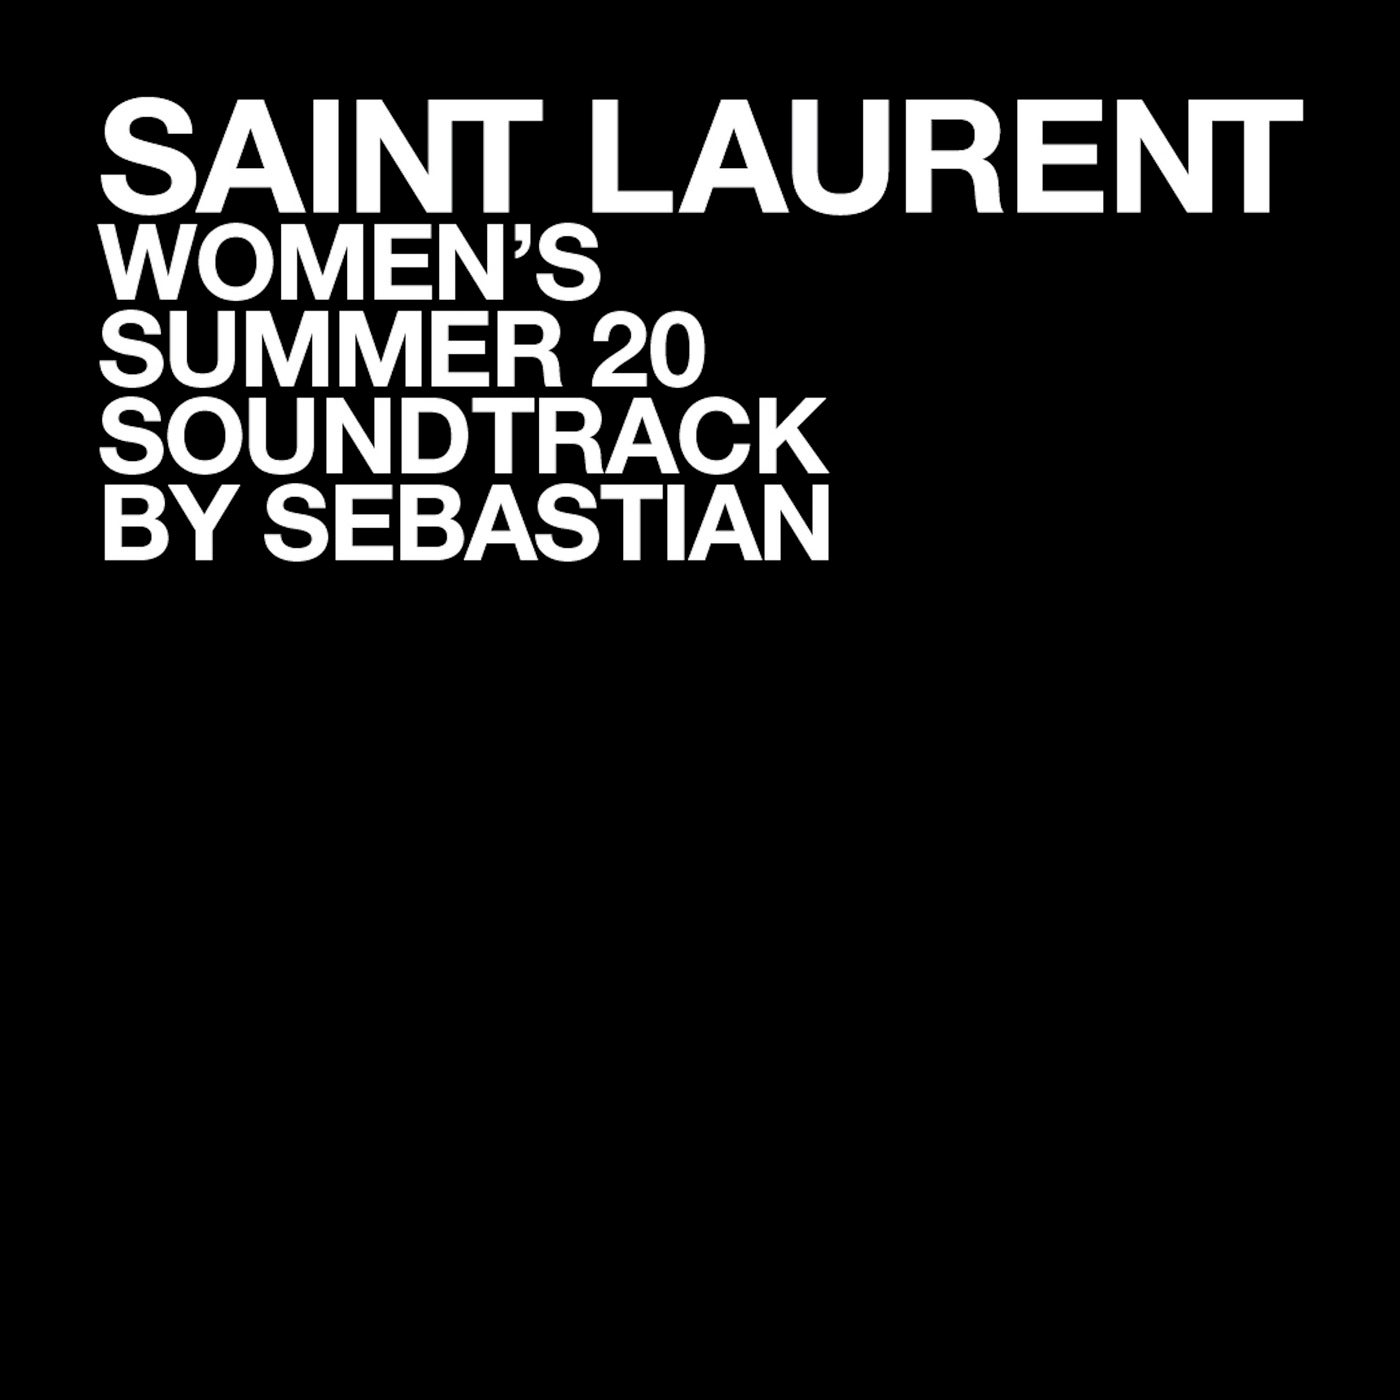 SAINT LAURENT WOMEN'S SUMMER 20